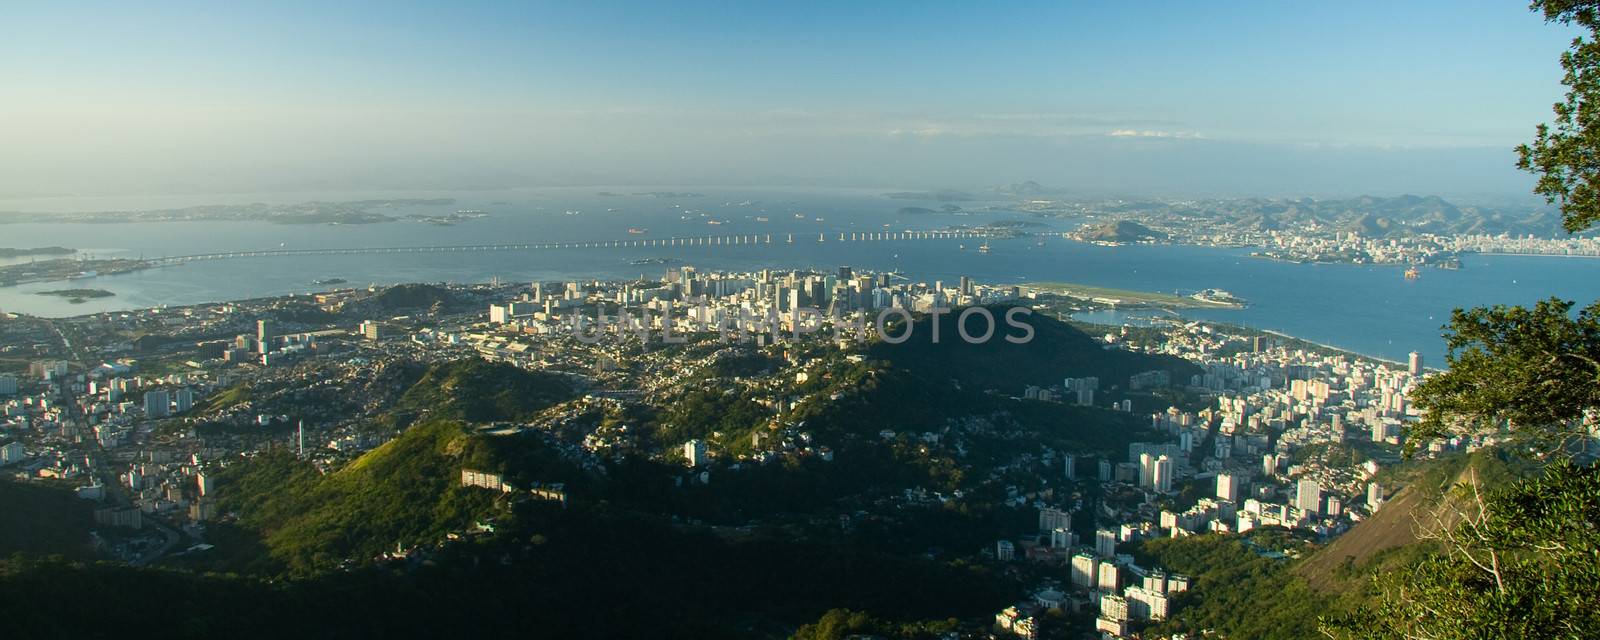 Distant view of Rio de Janeiro by CelsoDiniz